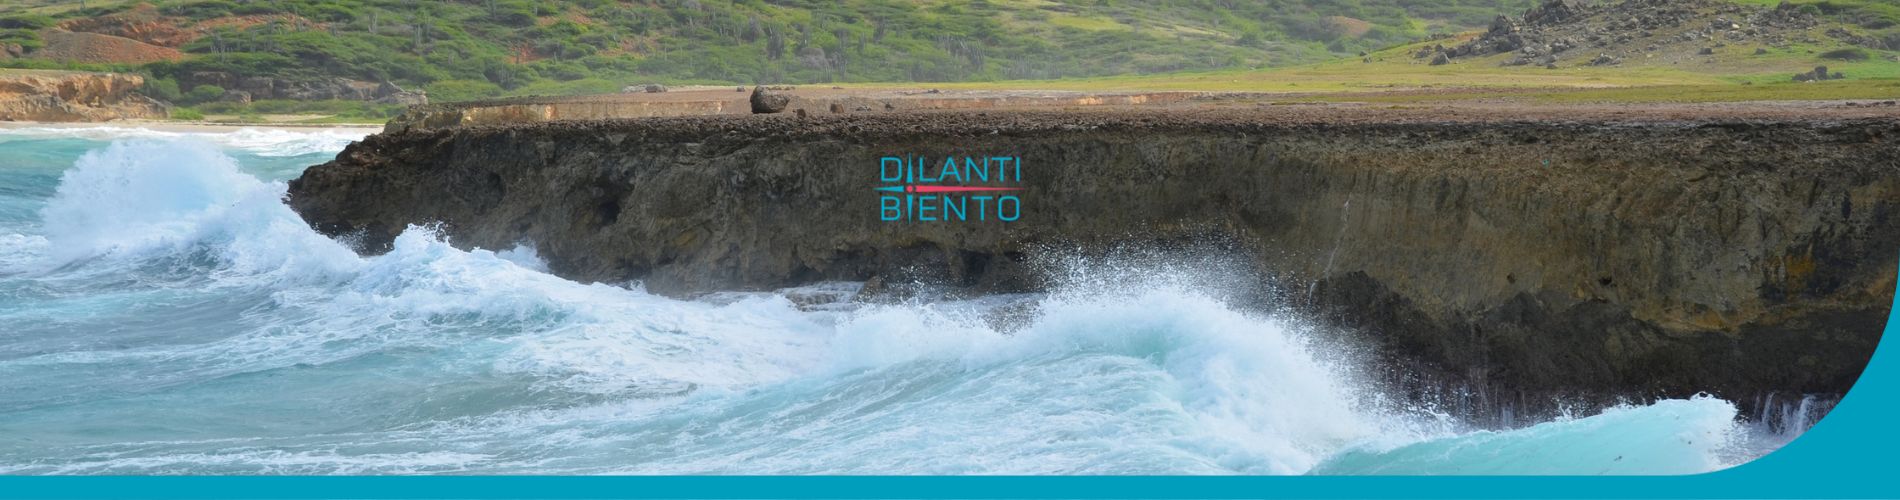 Dilanti Biento | Strategic Plan 21 - 25